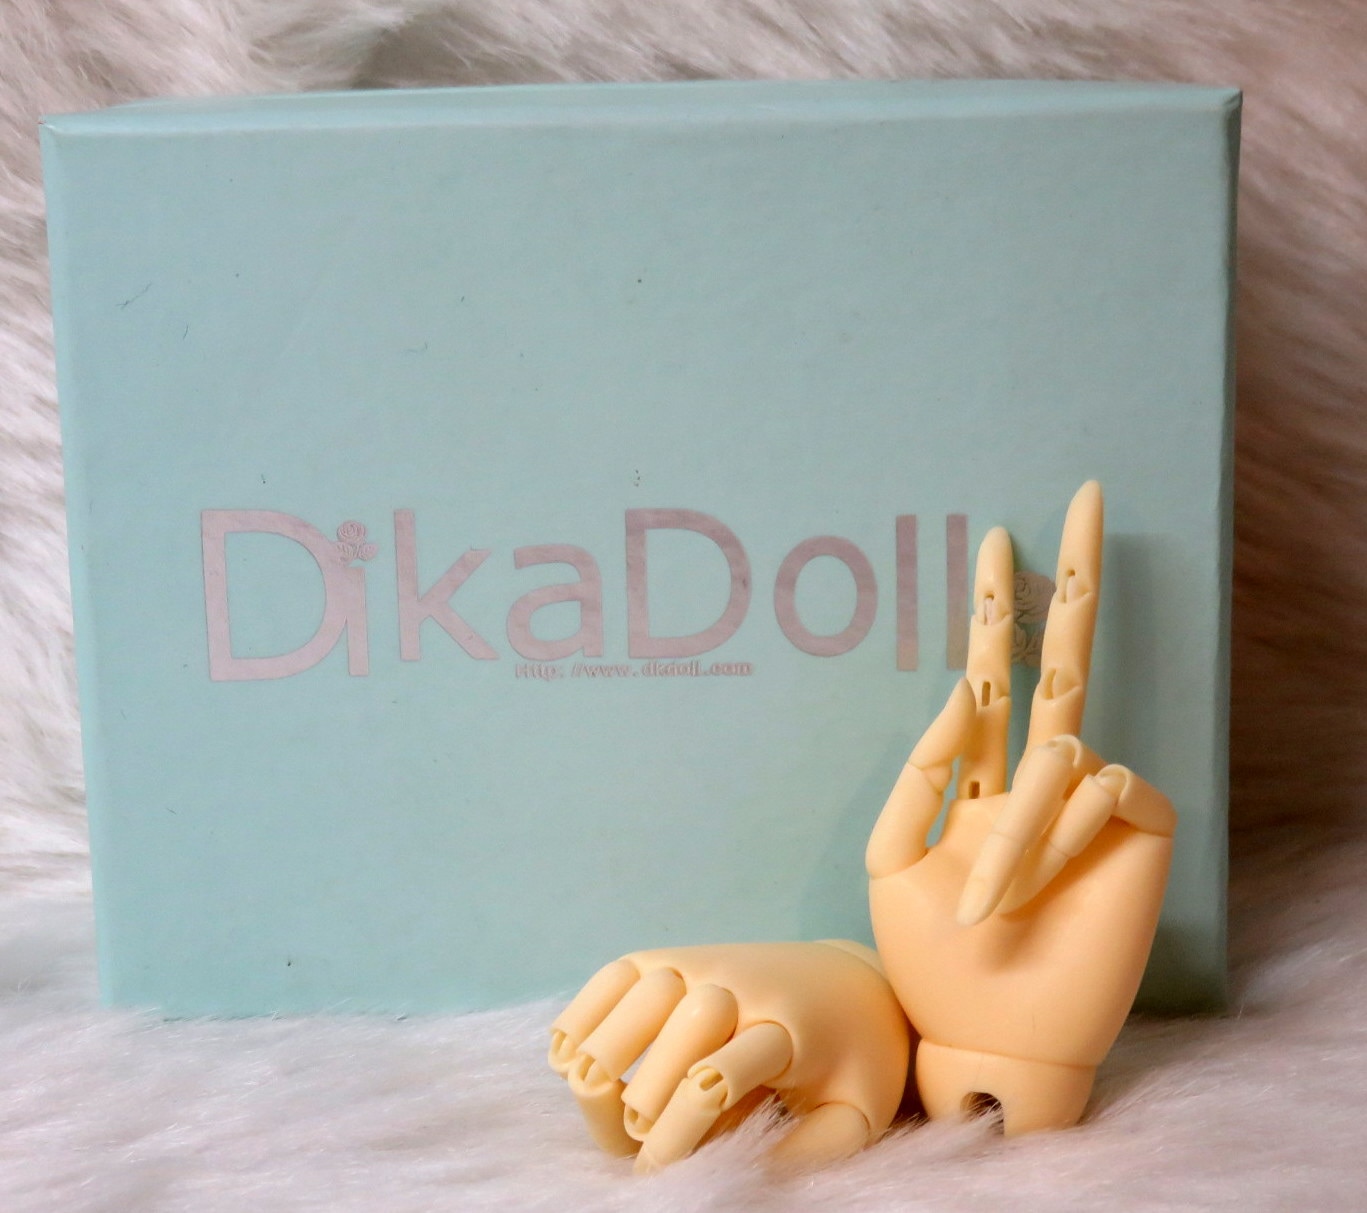 Dika doll 関節ハンド 40cmドール MSDサイズ www.mypapers.com.ar